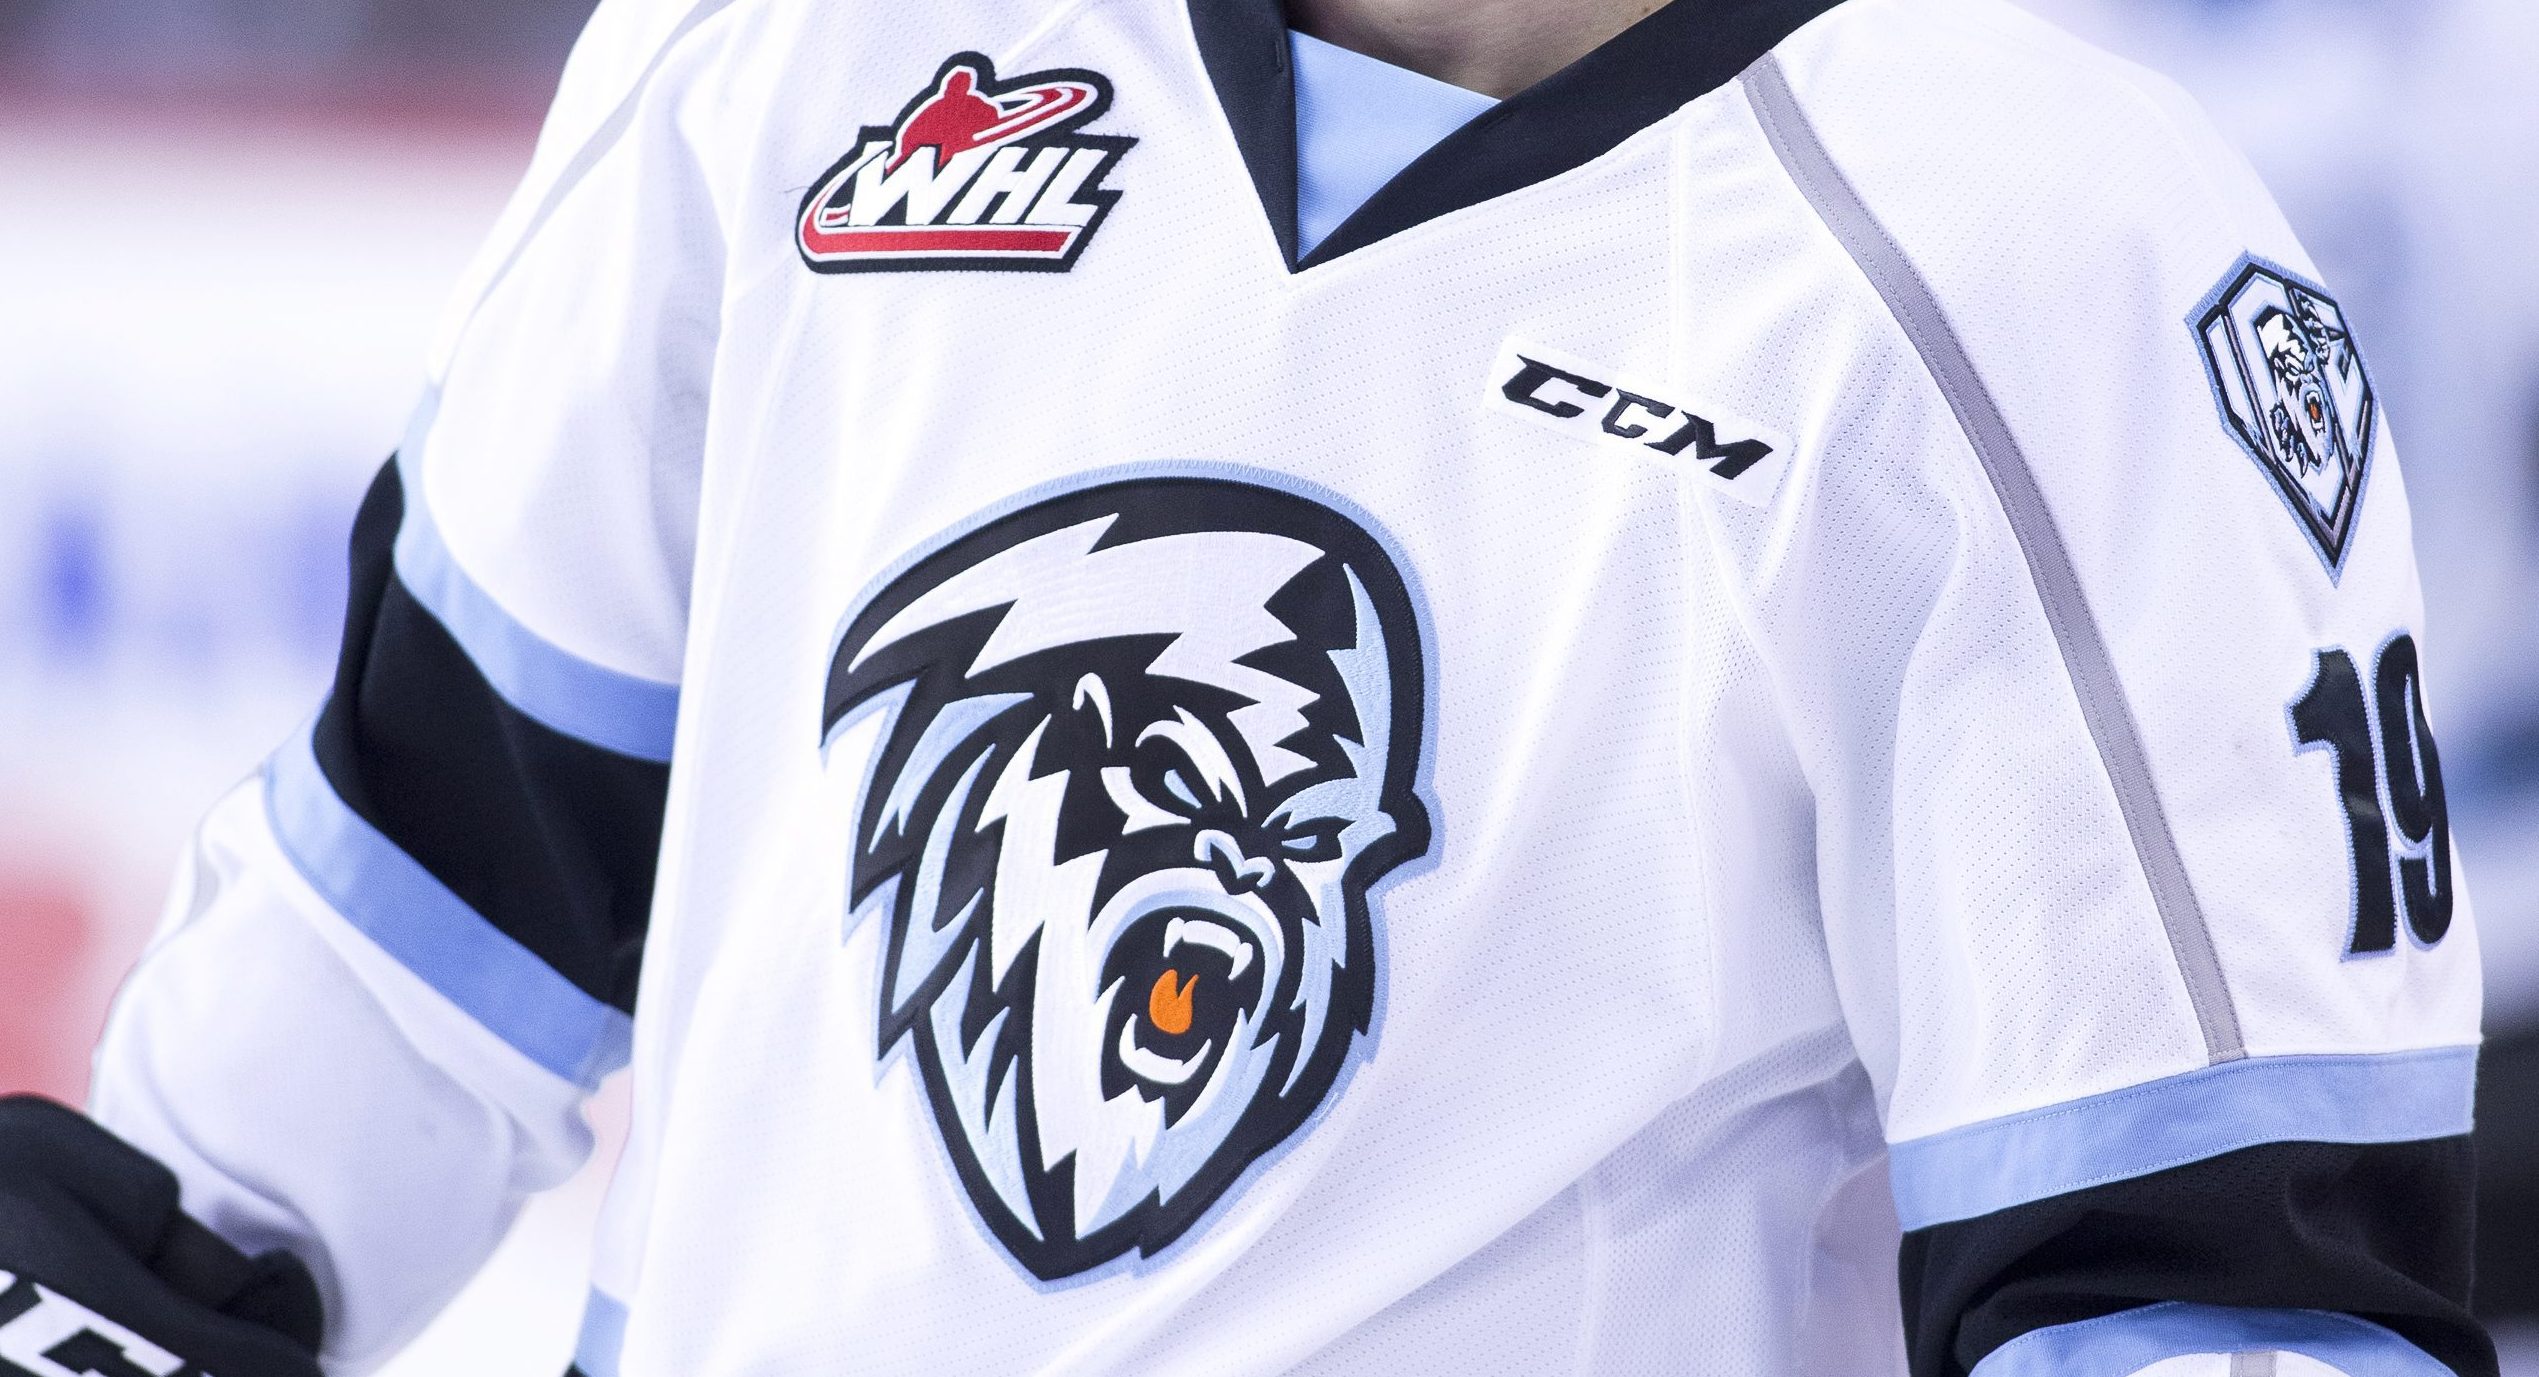 WHL confirms Kootenay Ice relocation to Winnipeg